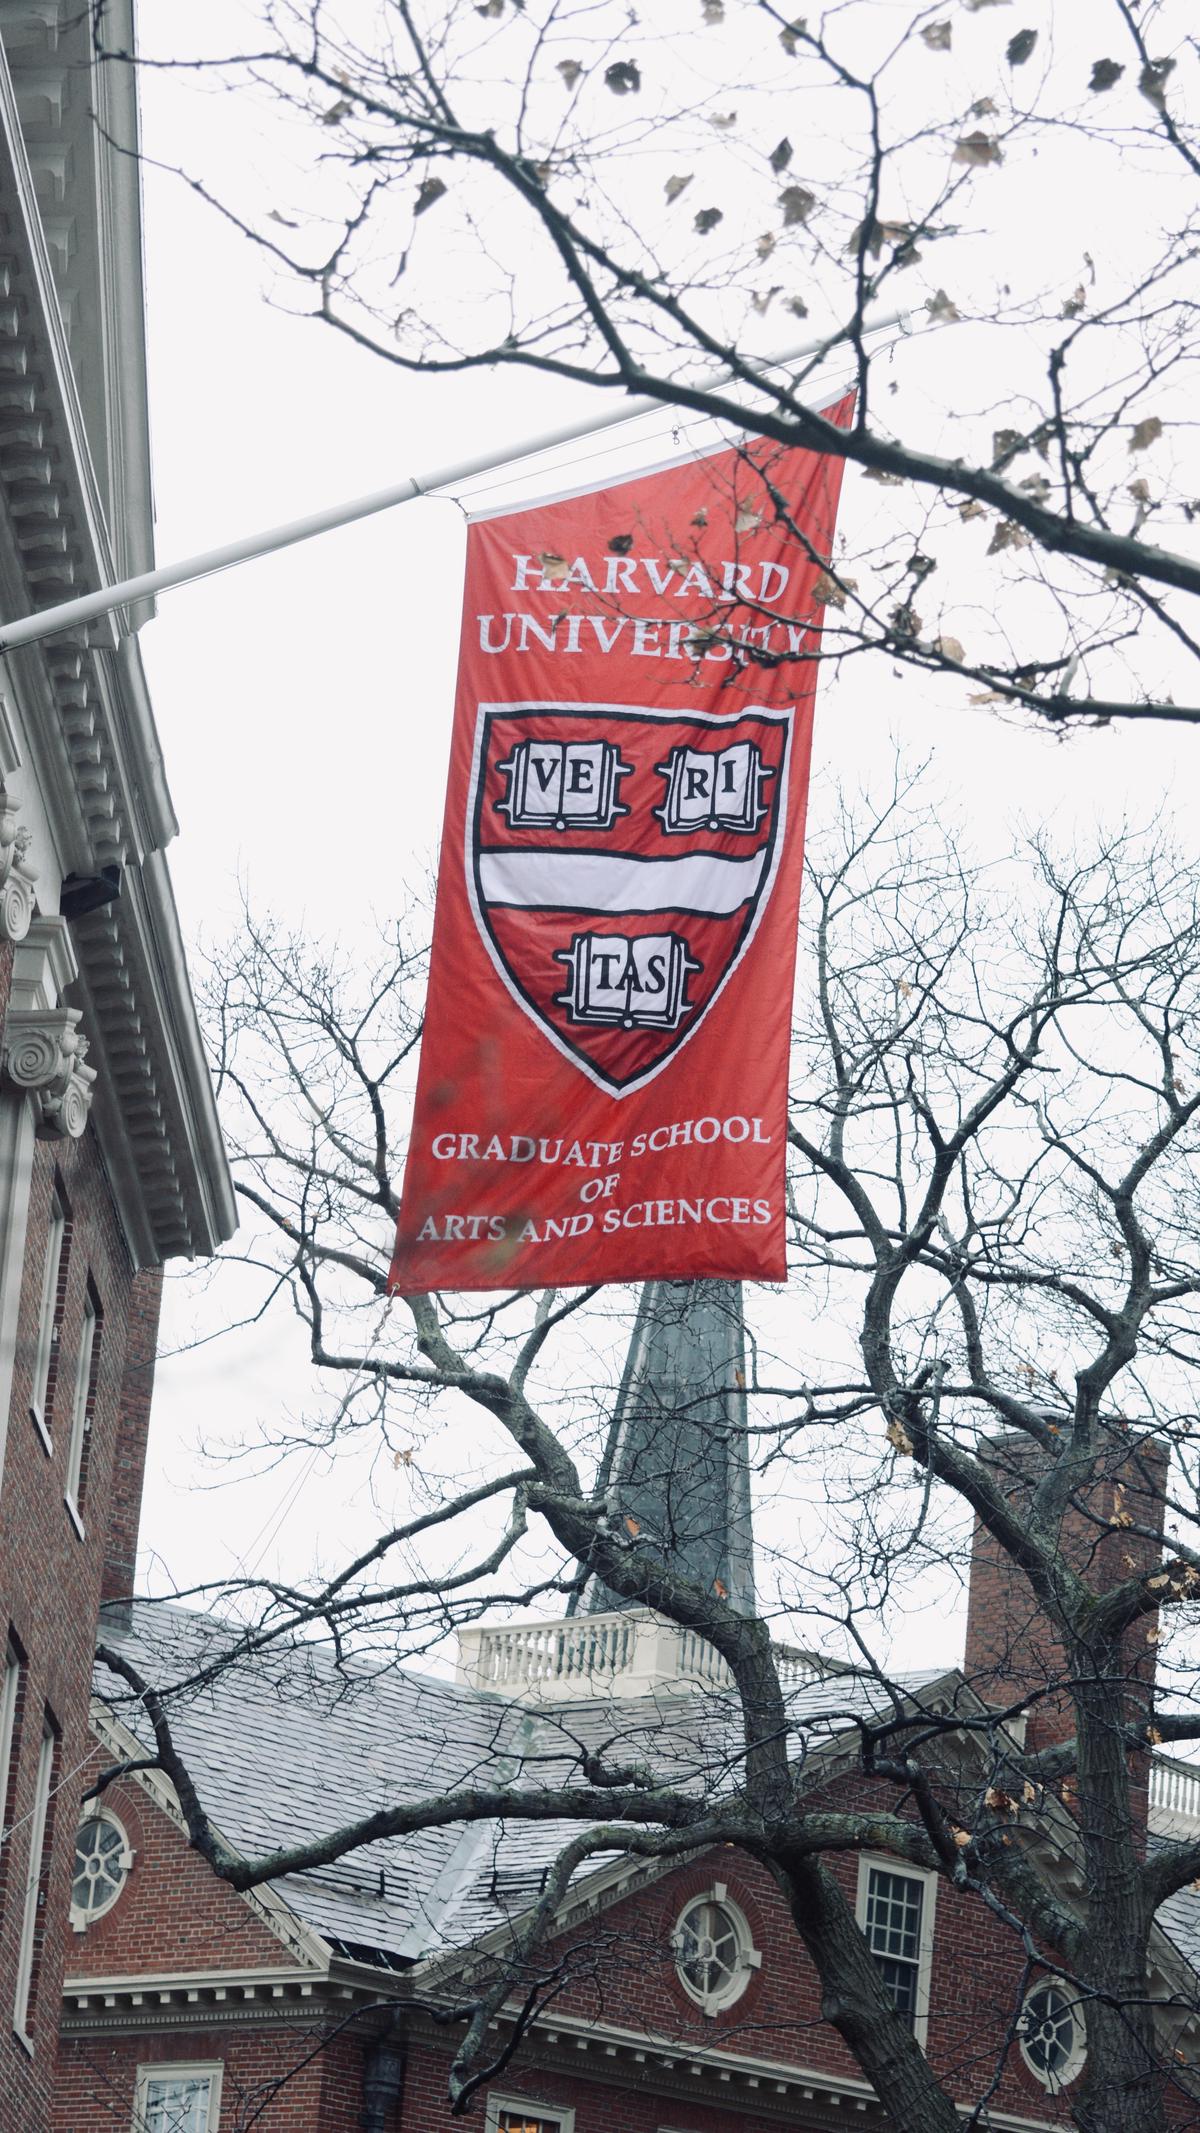 Image of Harvard University campus and surroundings